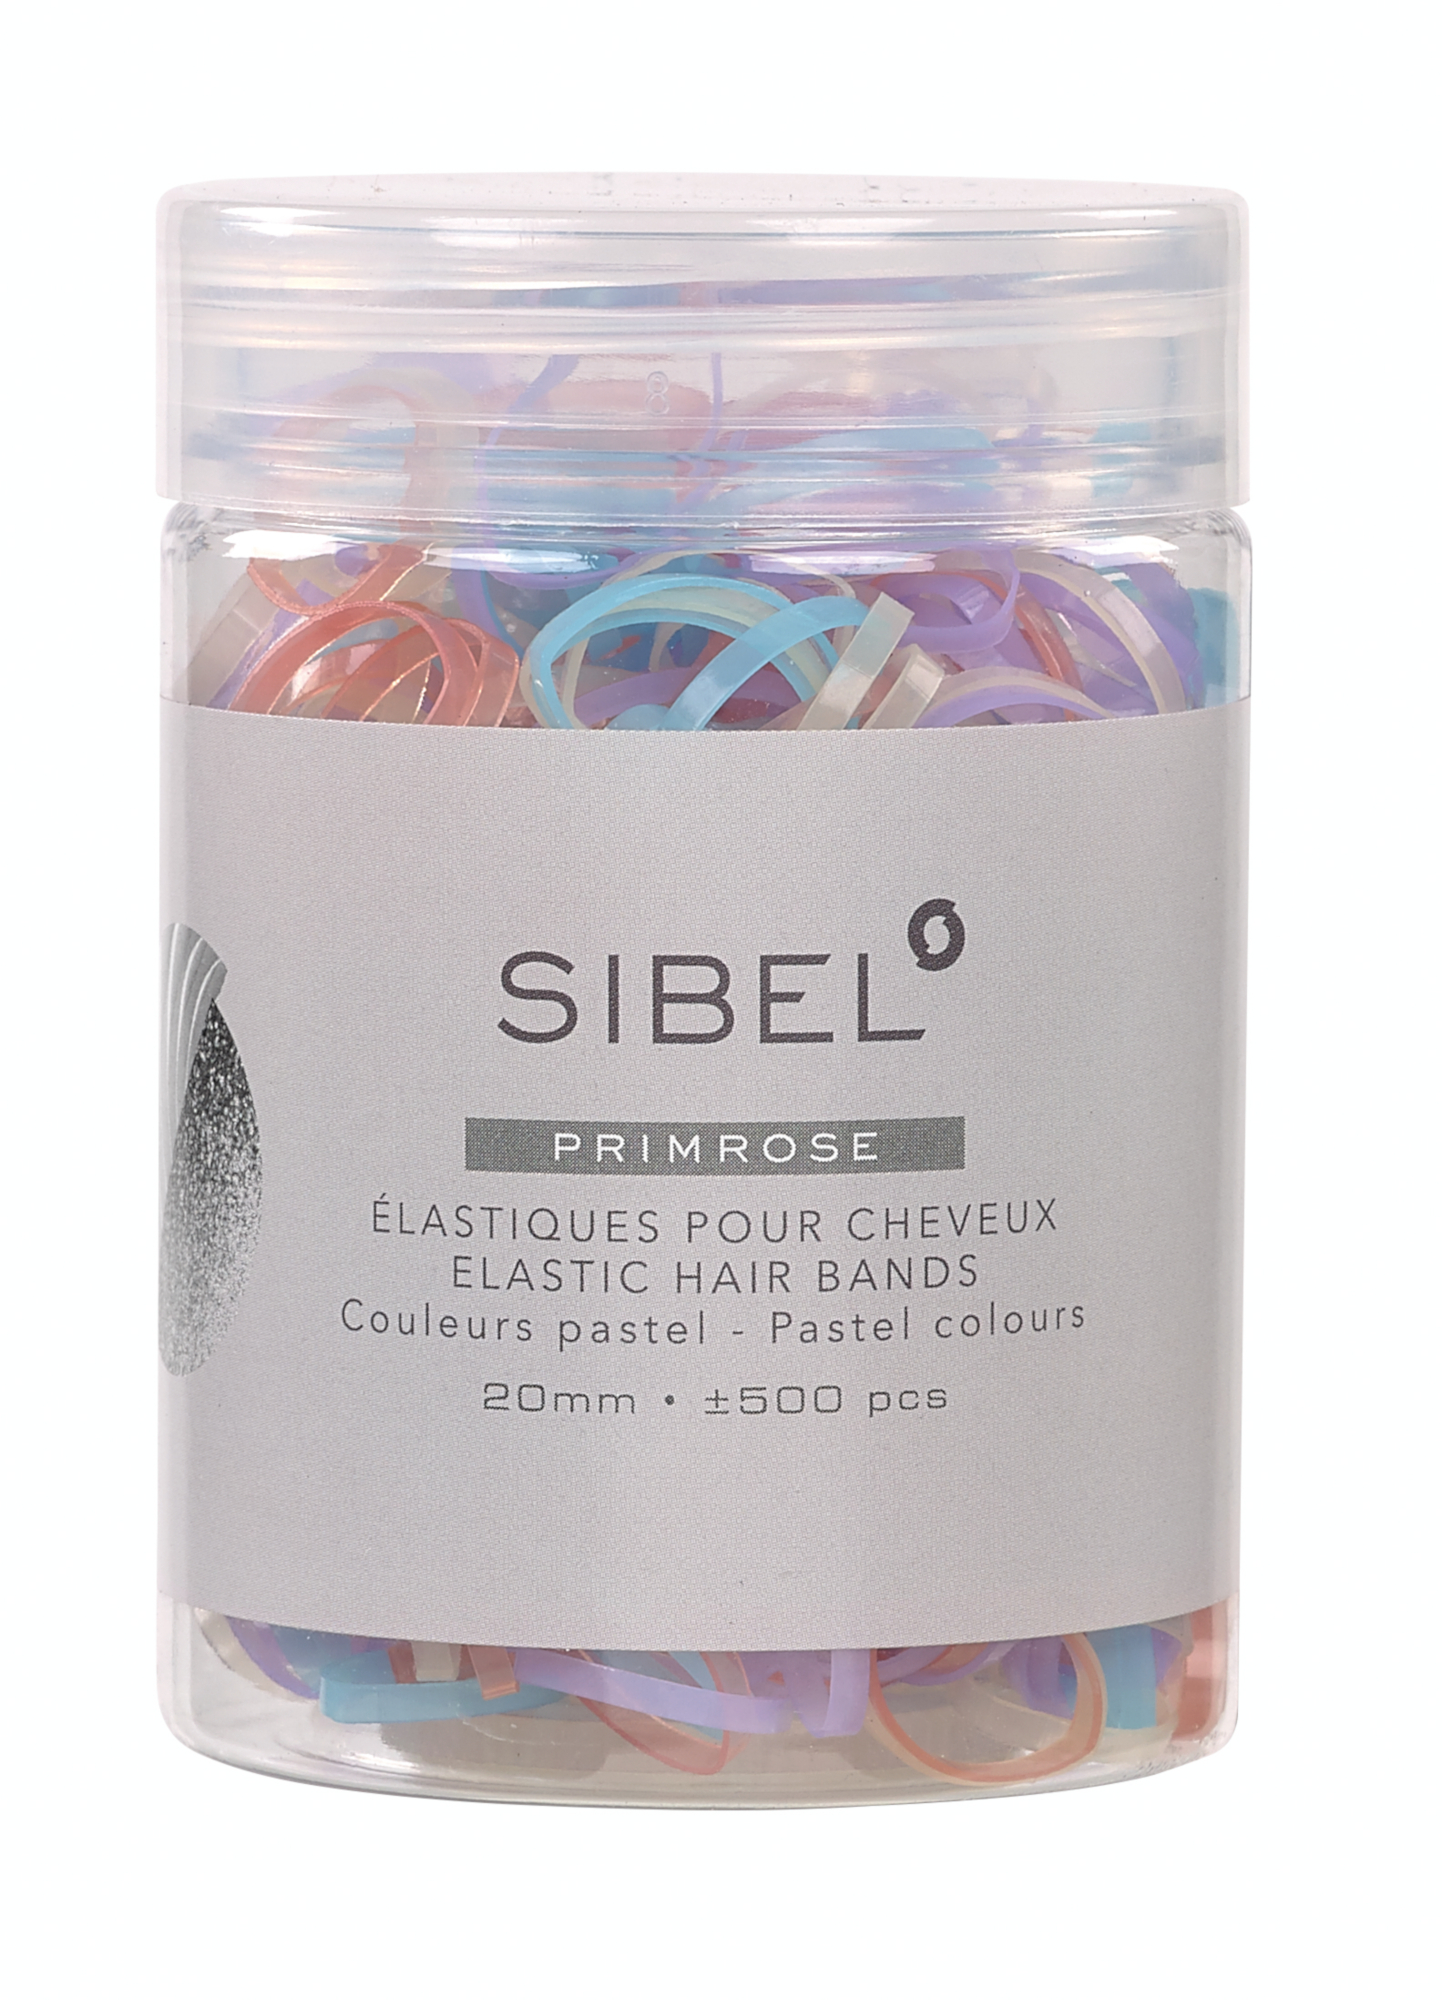 Gumičky do vlasů Sibel Primrose - 20 mm, 500 ks, pastelové (4432952) + dárek zdarma